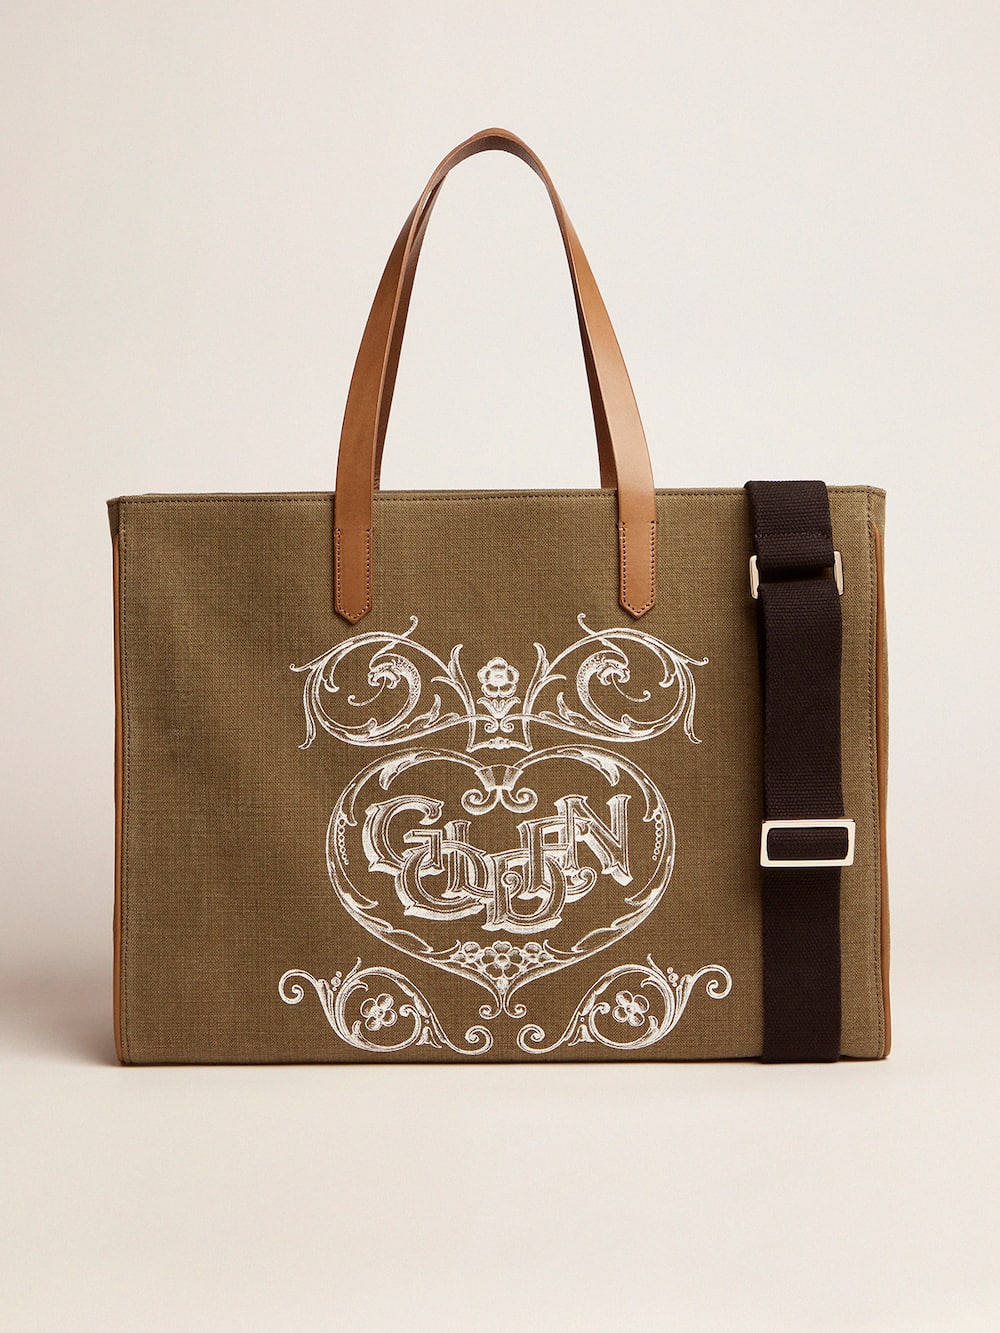 Golden Goose - Bolso California Bag de tela verde militar East-West con estampado serigrafiado in 